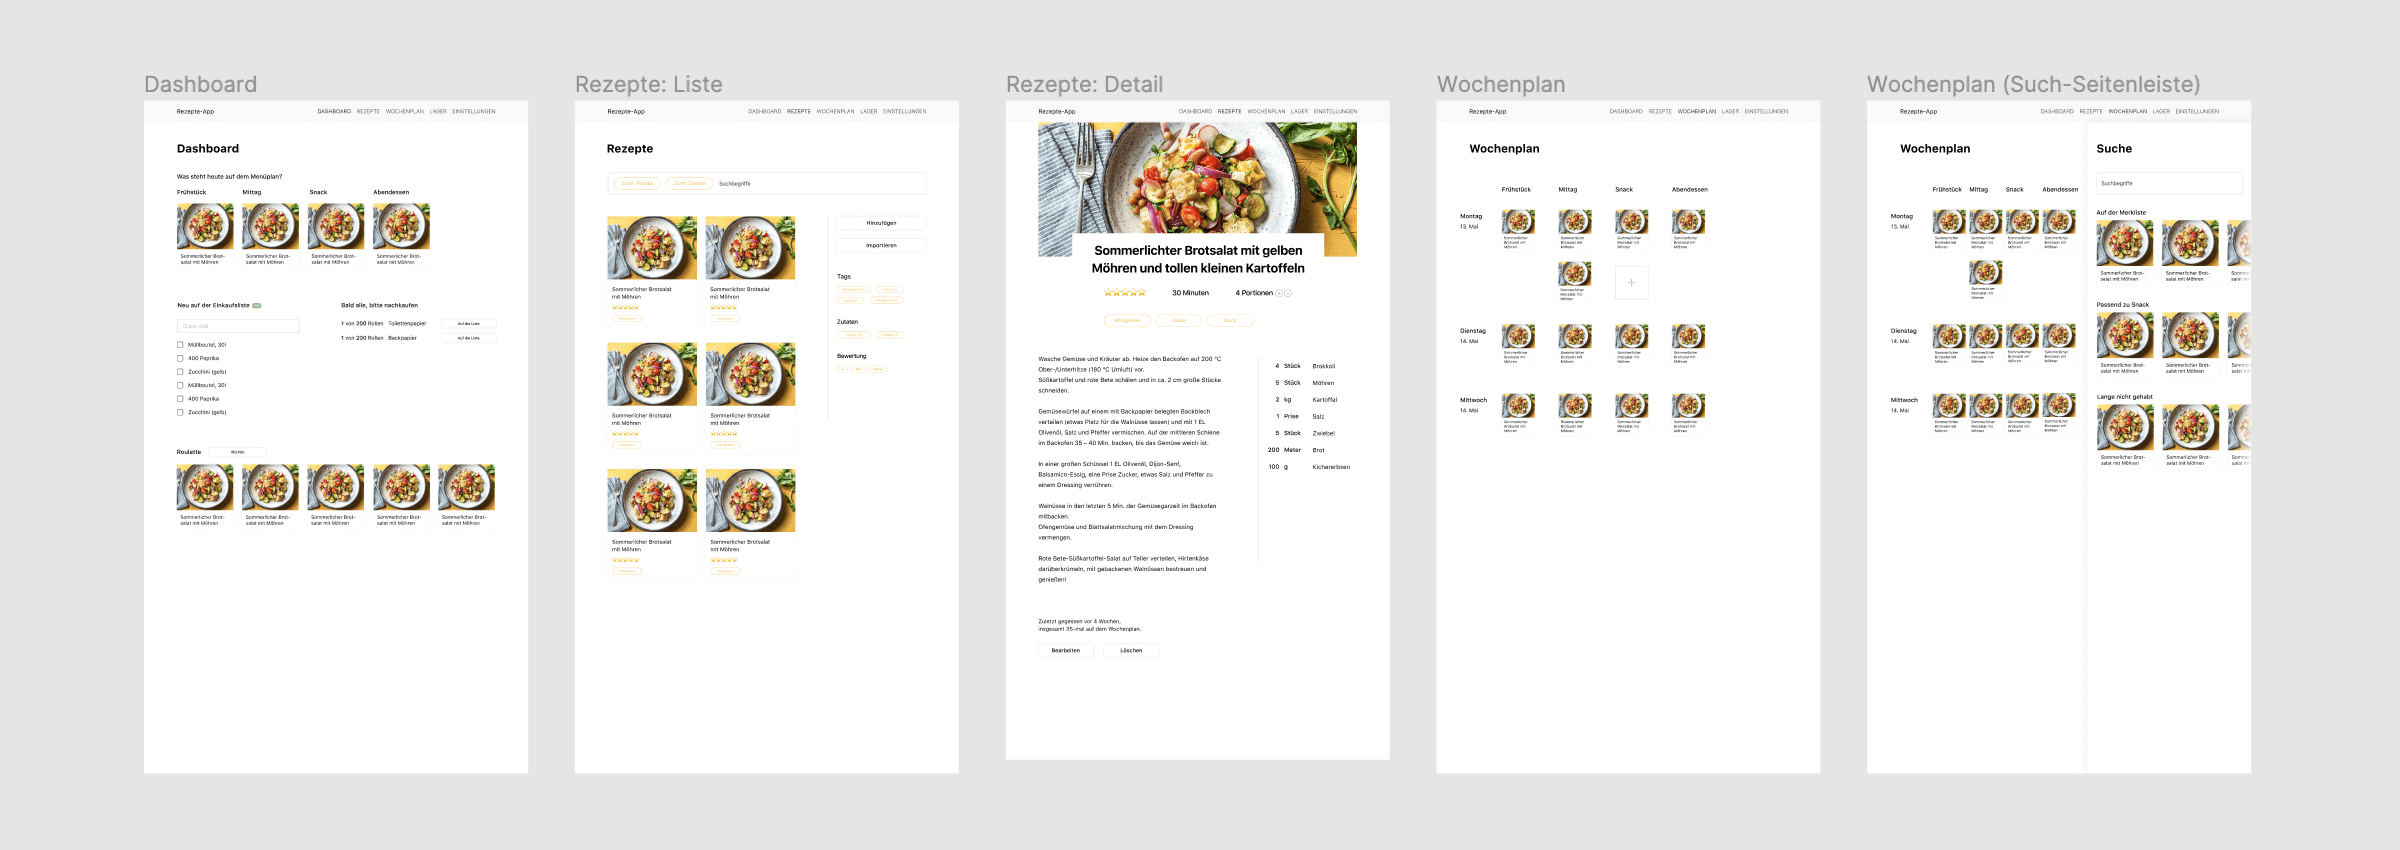 rezepte-app-design.png